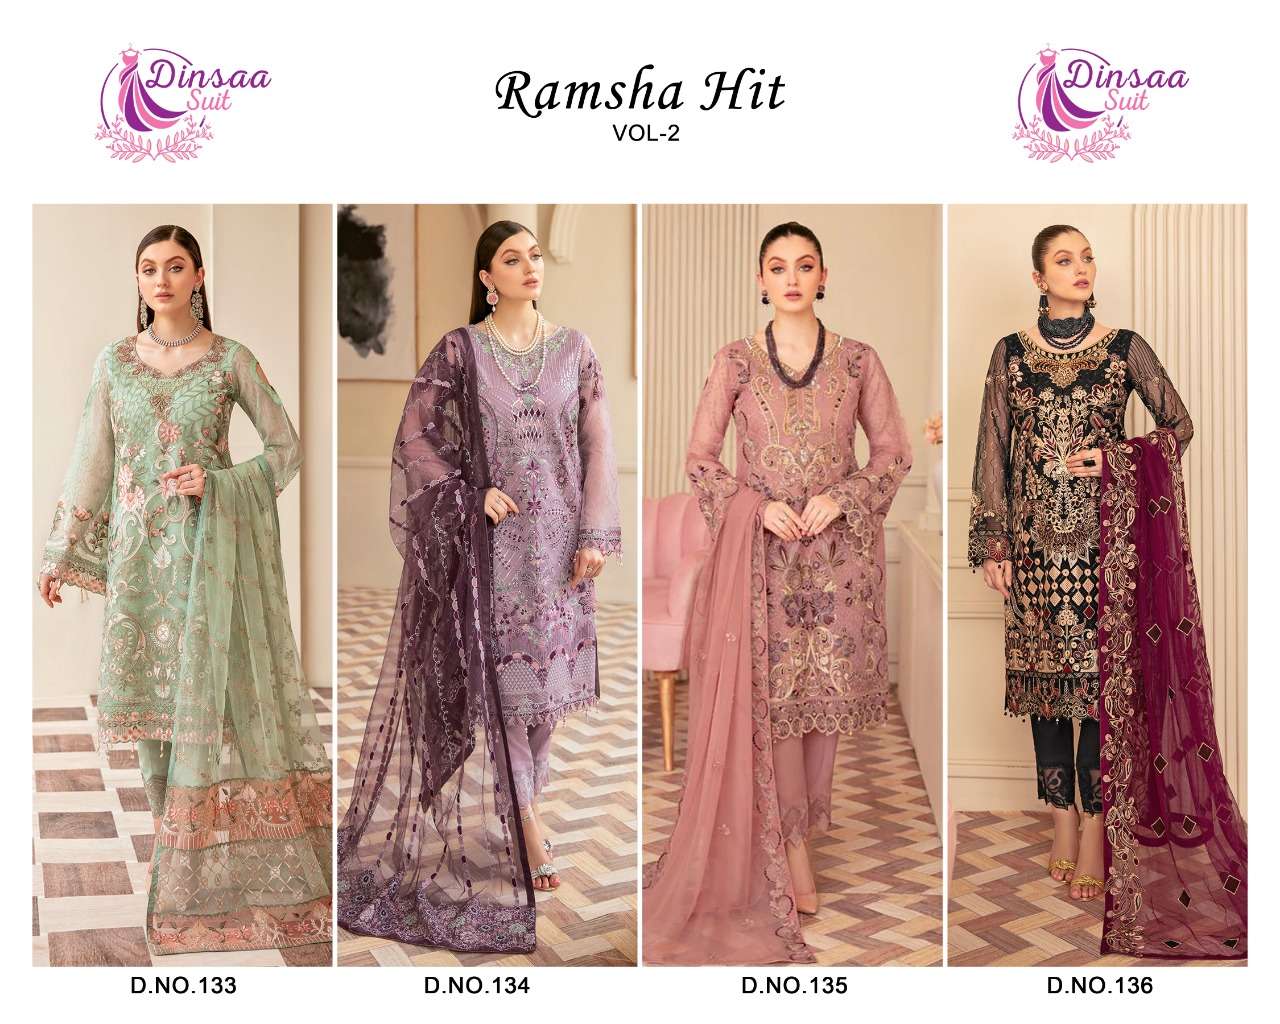 dinsaa suits ramsha hit vol-2 catalogue wholesale best price supplier from surat